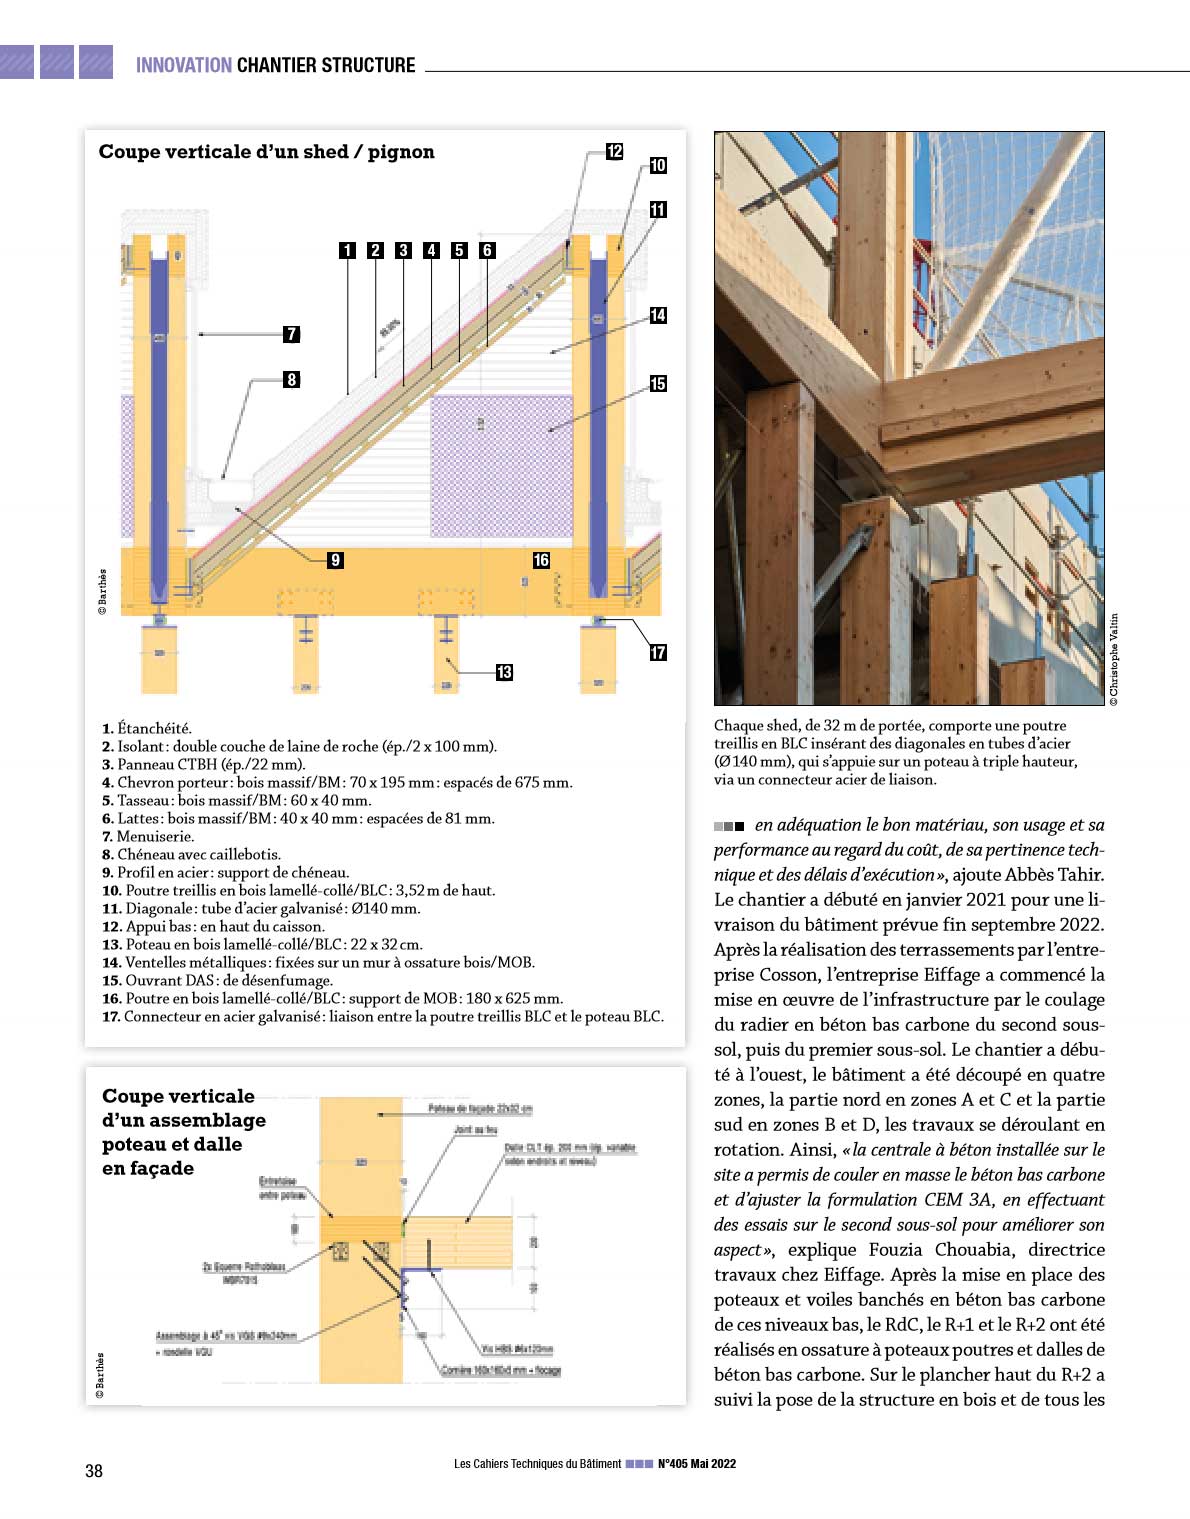 innovation chantier et structure hybridite vertueuse pdf 2 1